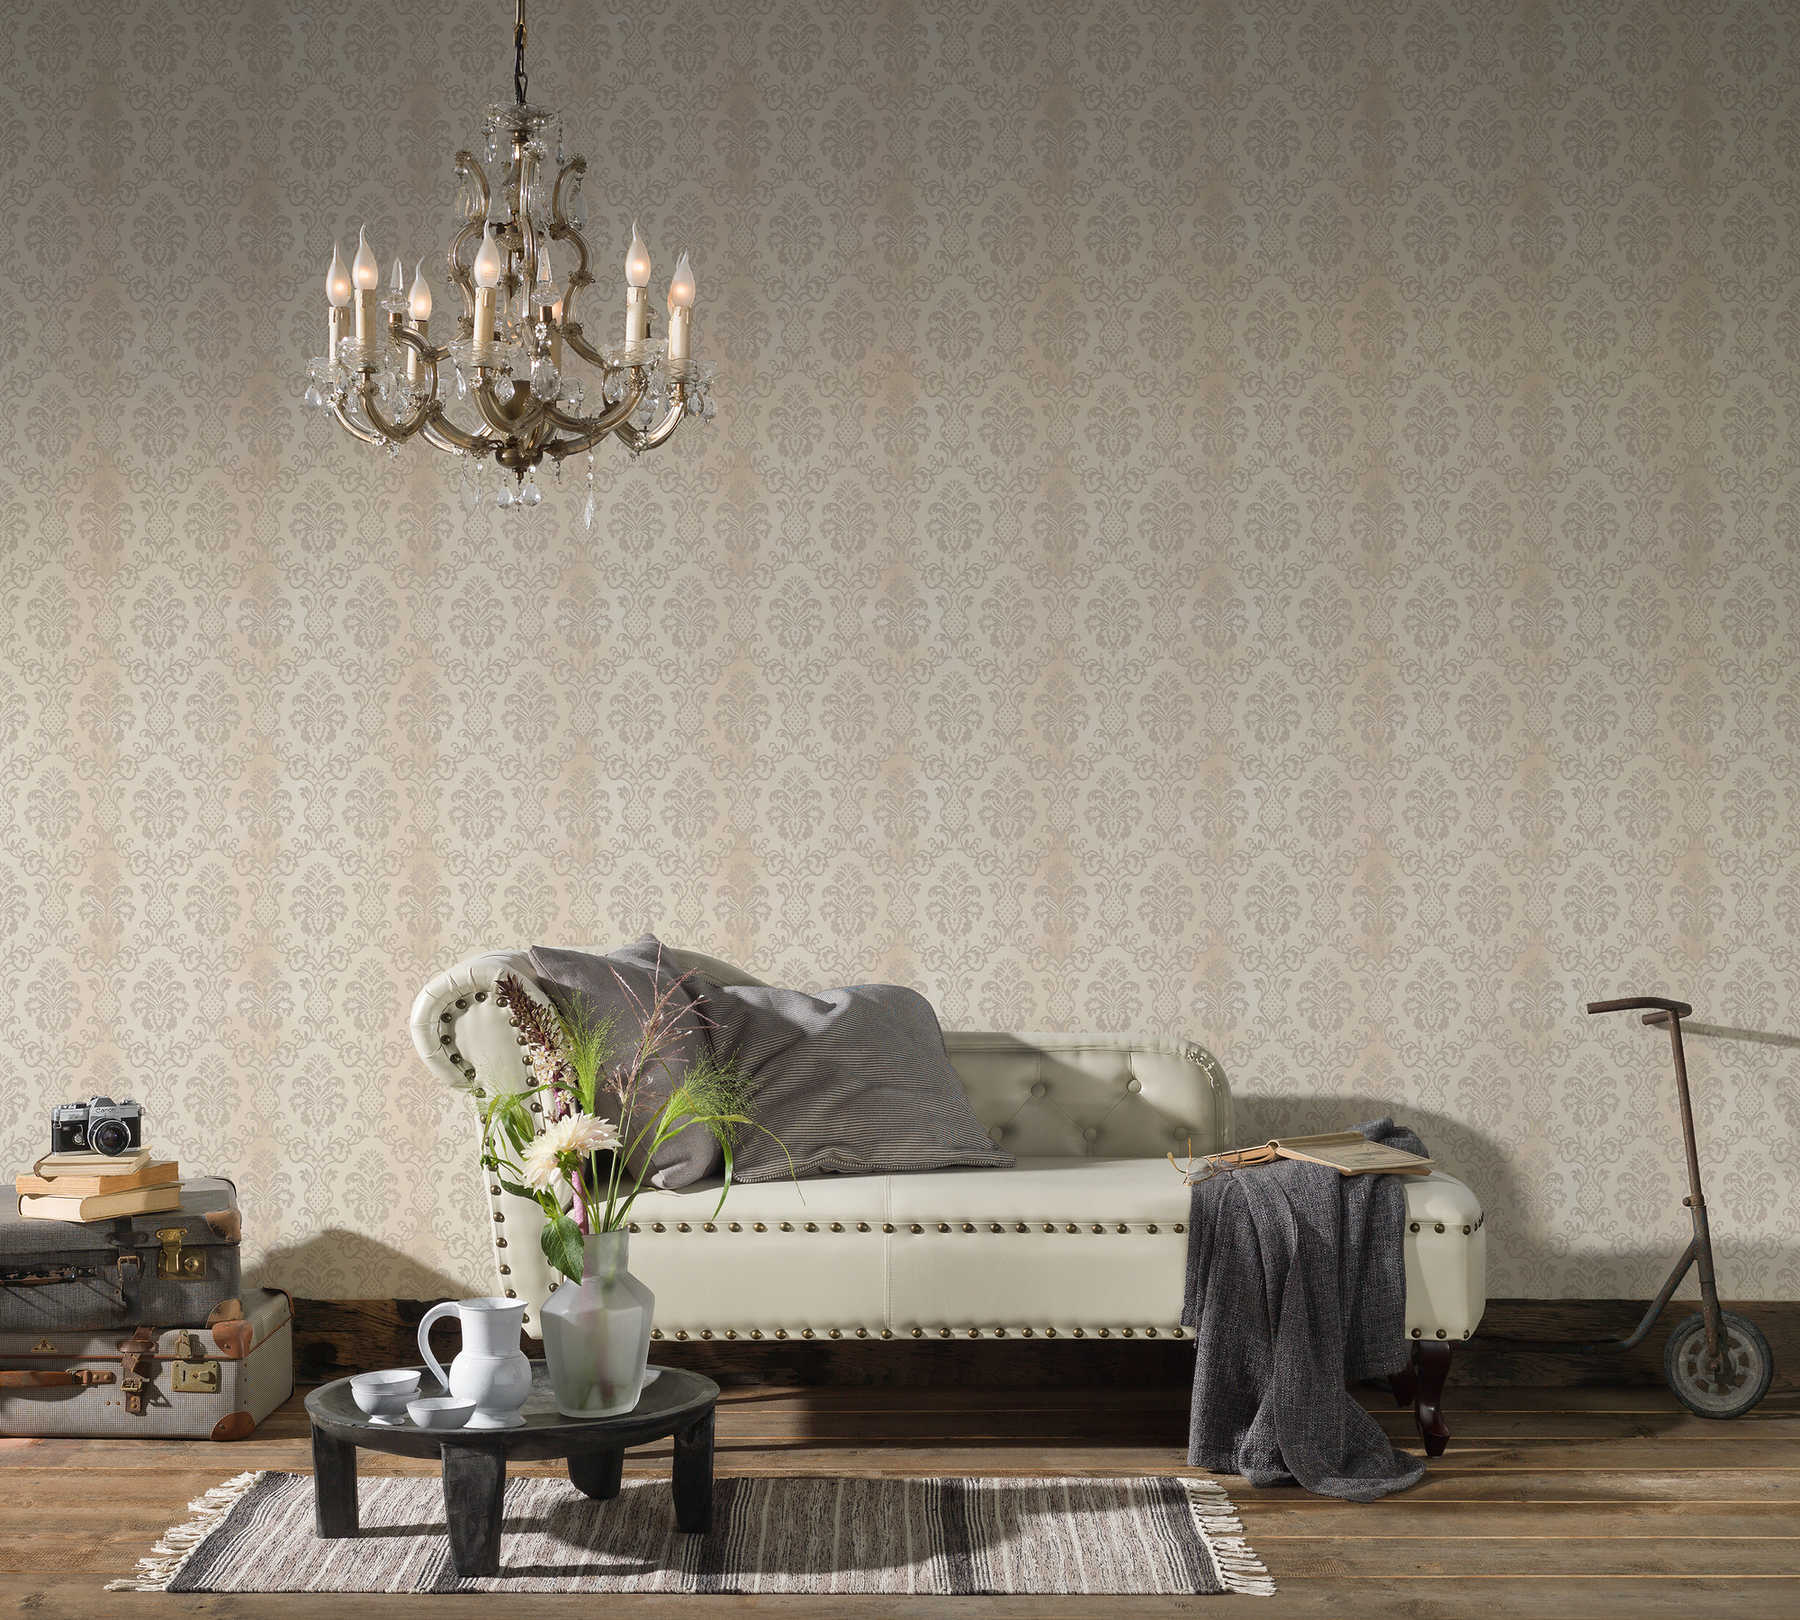             Ornament Tapete Colonial Style – Creme, Grau
        